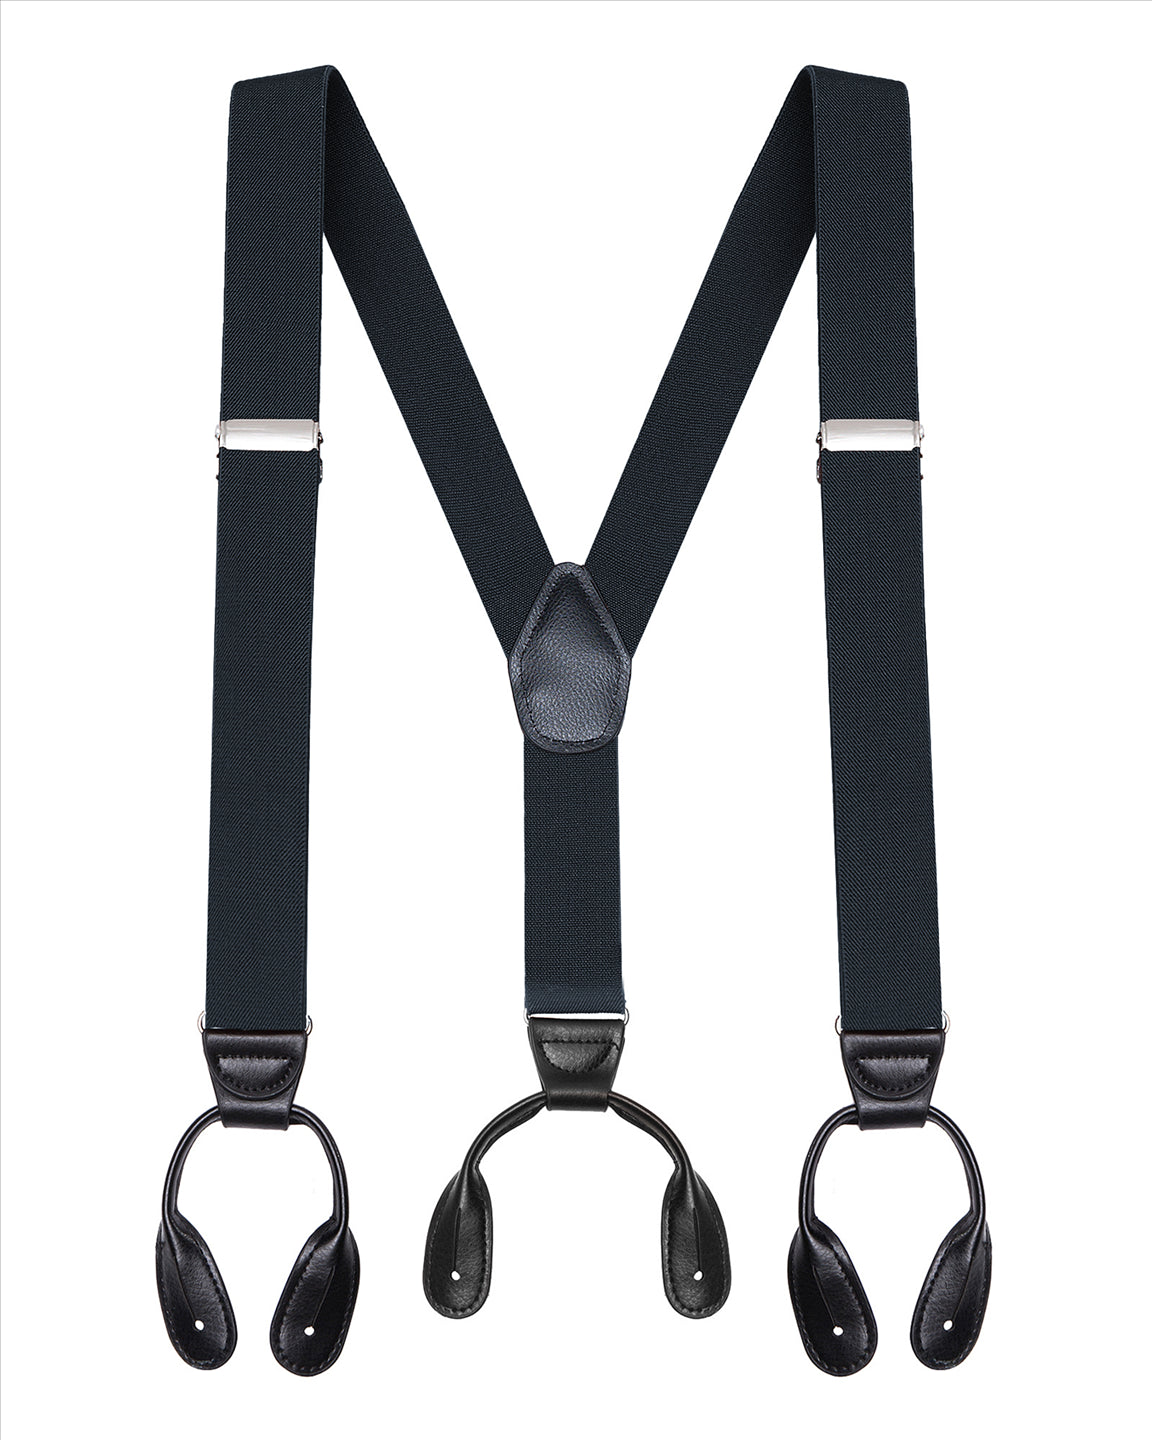 Buyless Fashion Butten End Suspenders for Men - 48